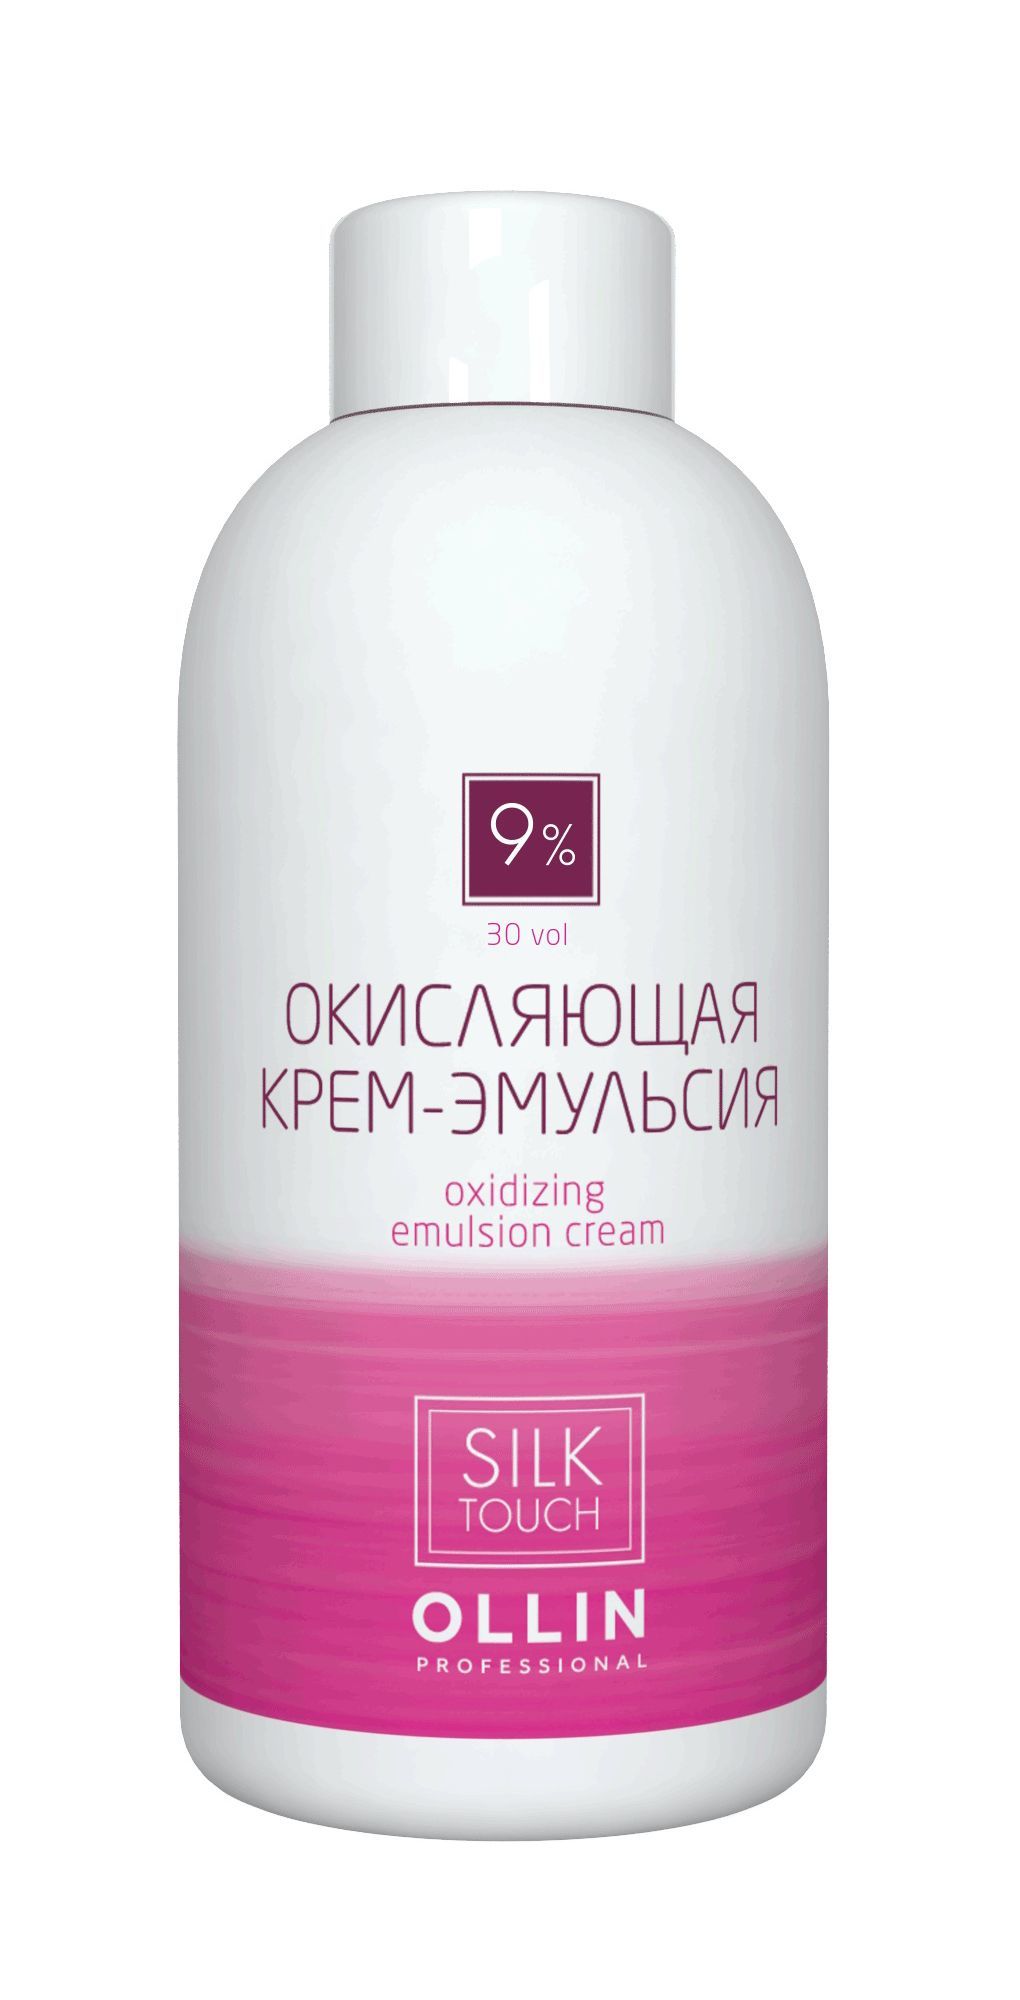 Ollin, Окисляющая крем-эмульсия 9% 30vol серии «Silk Touch», Фото интернет-магазин Премиум-Косметика.РФ